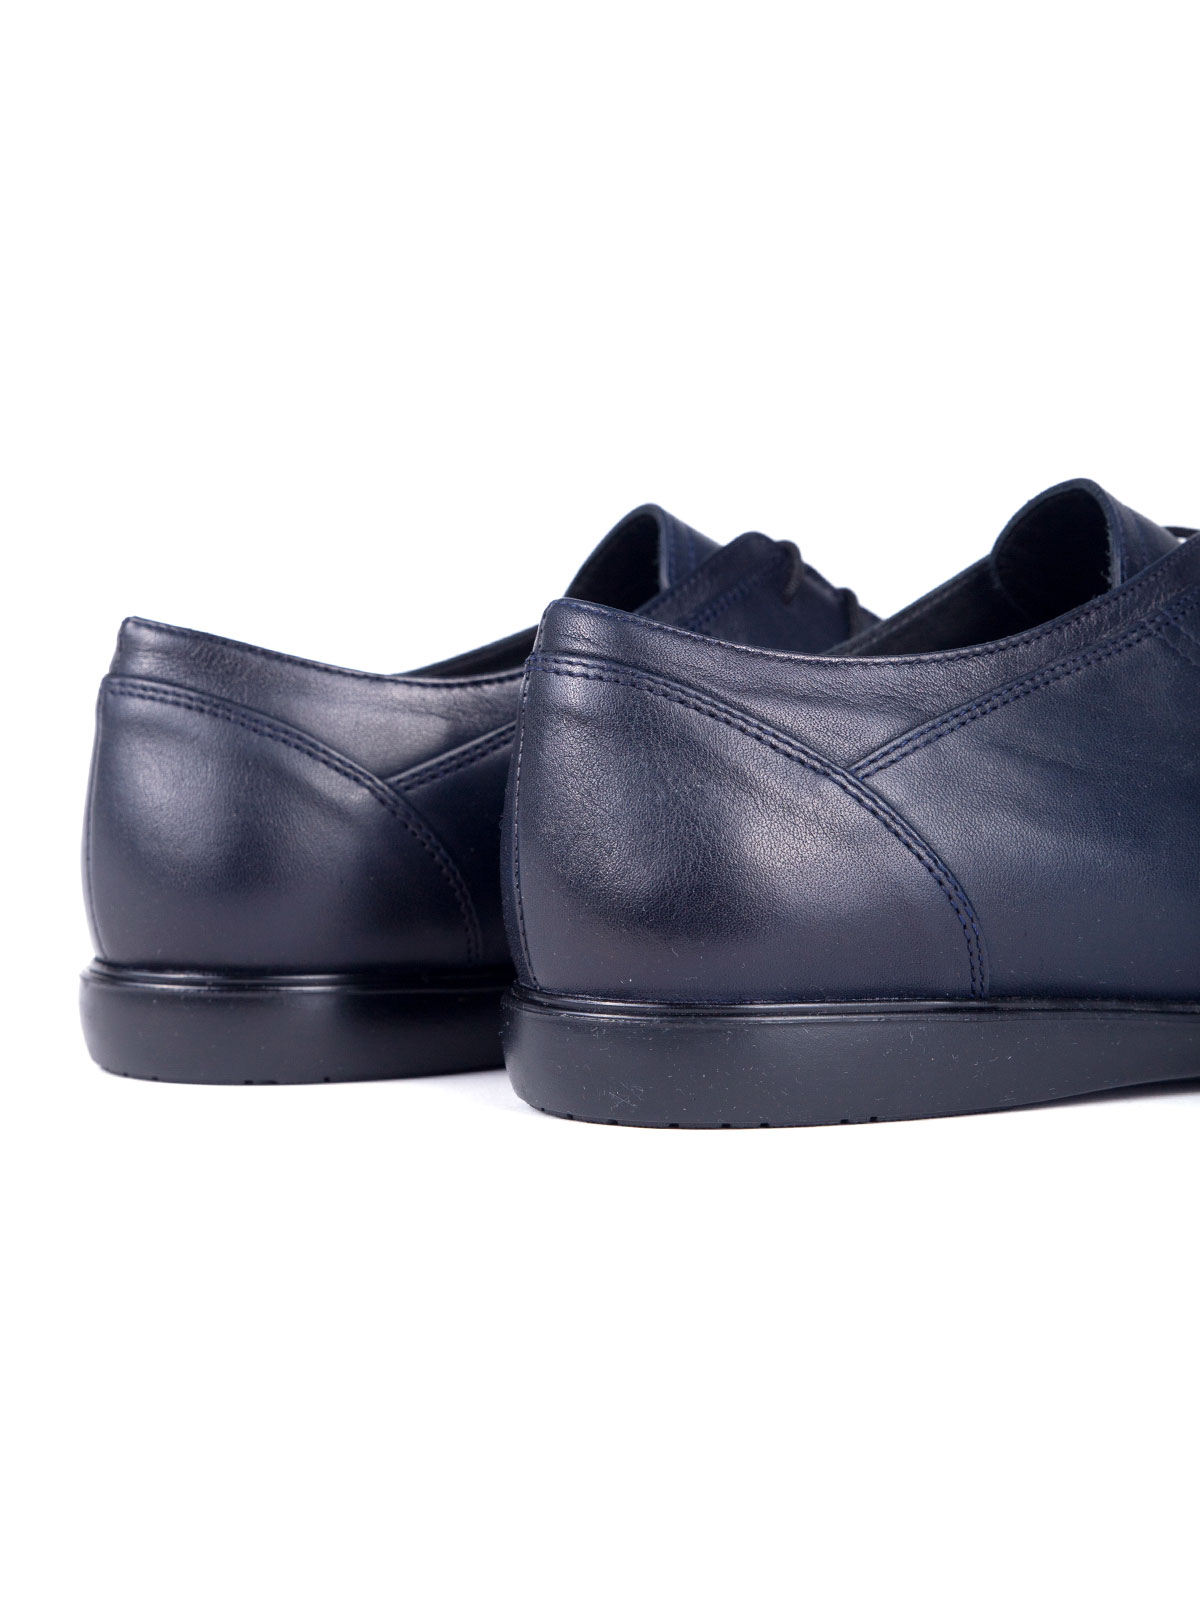 Dark blue shoes - 81054 - € 50.06 img3